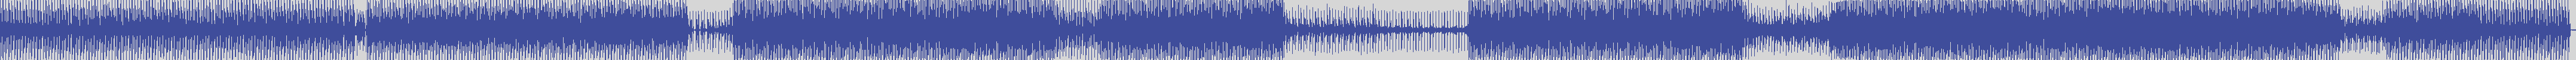 atomic_recordings [AR017] Diamond Dog, Cherry Baker - Roxanne [Original Mix] audio wave form